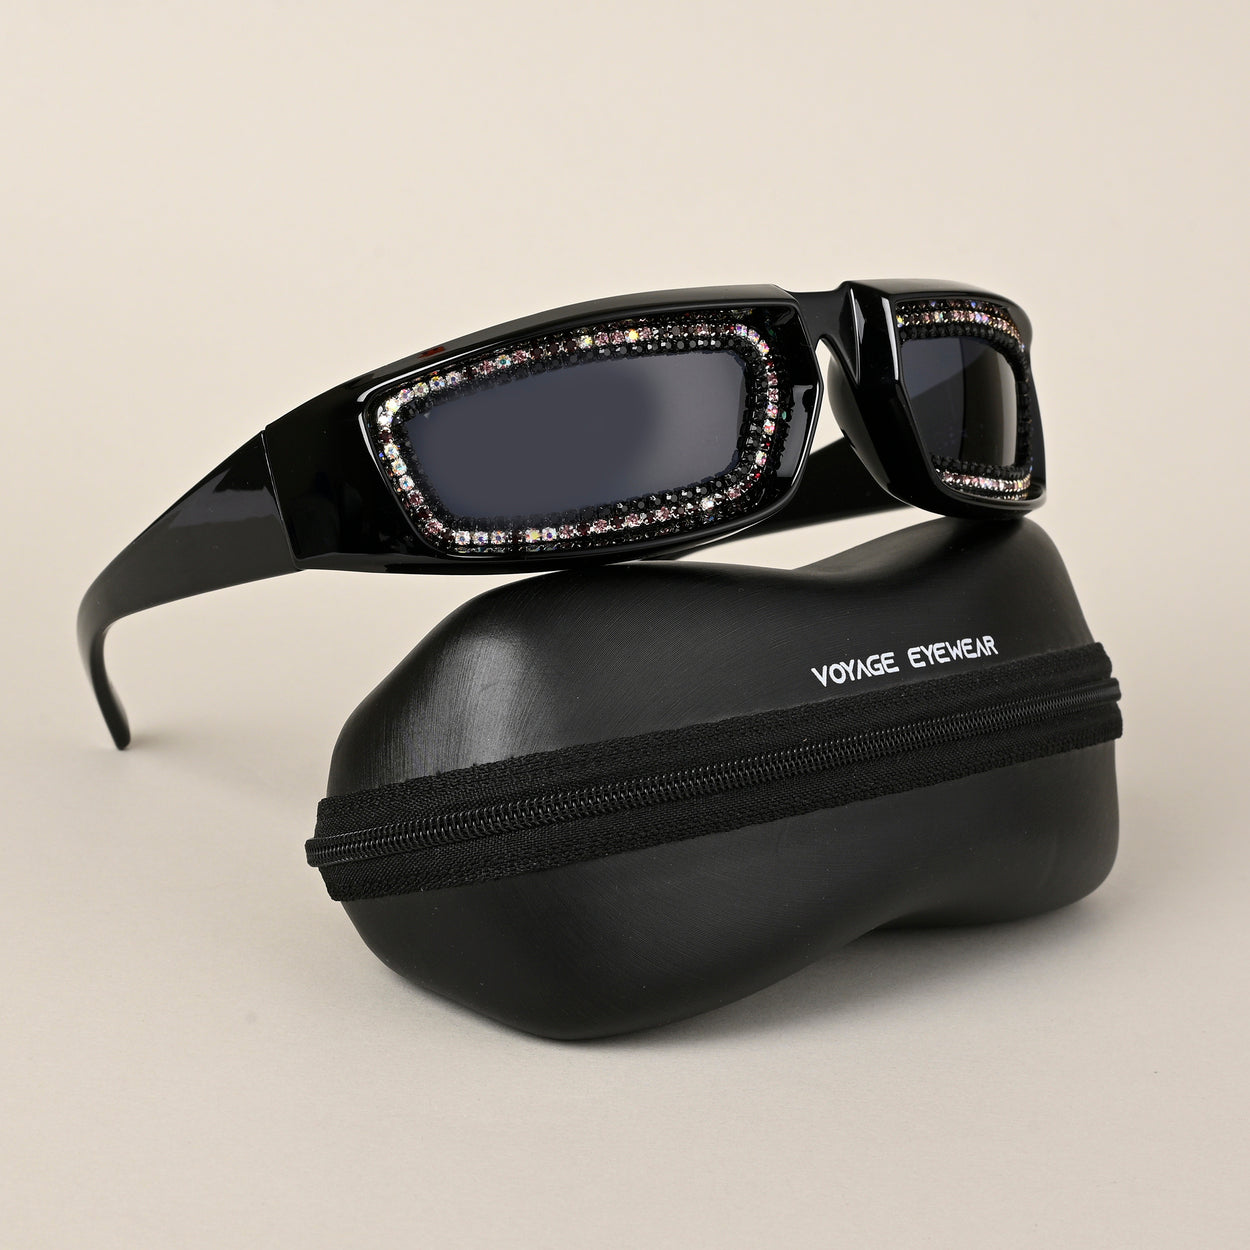 Voyage Black Wrap-Around Sunglasses for Men & Women (9182MG4352)